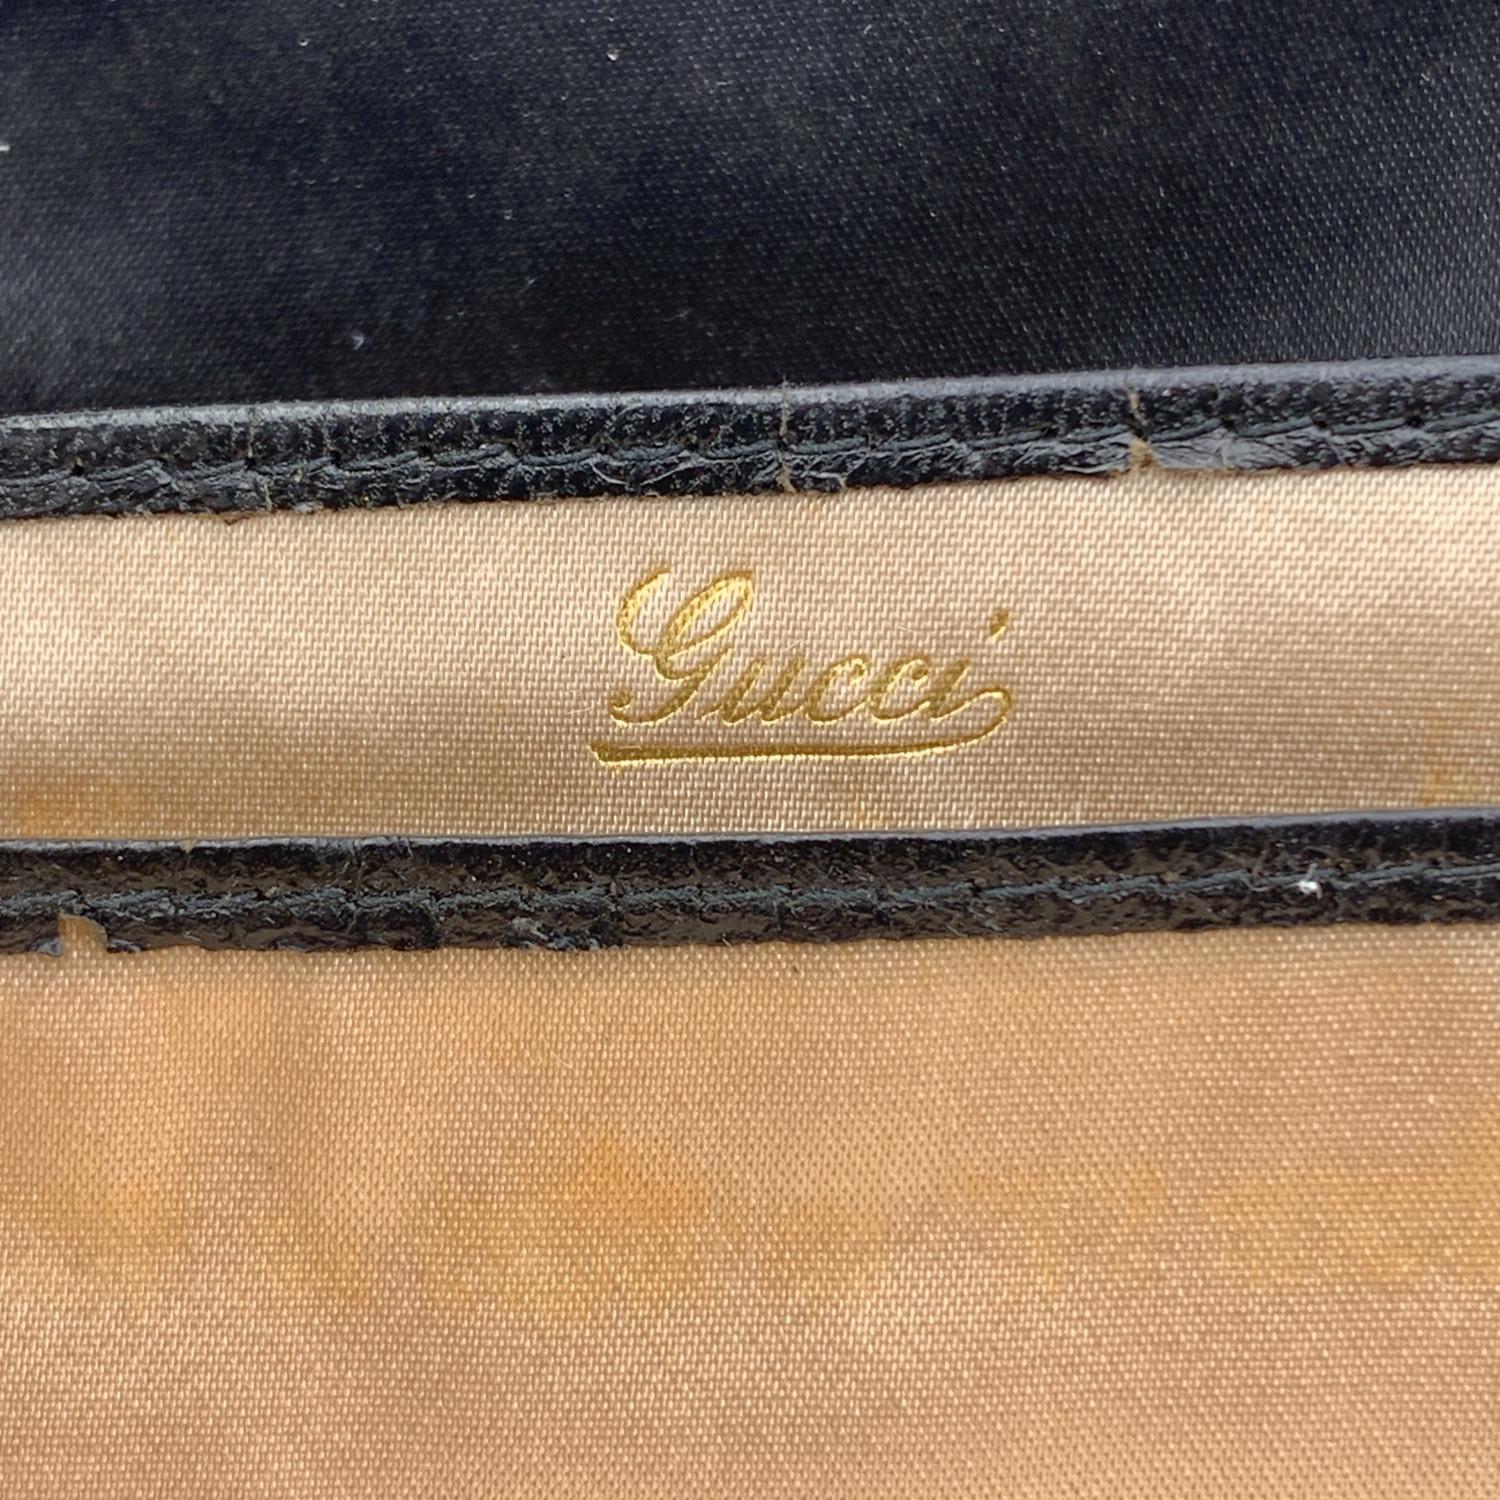 Women's Gucci Rare Vintage Black Velvet Satin Evening Bag Clutch Handbag